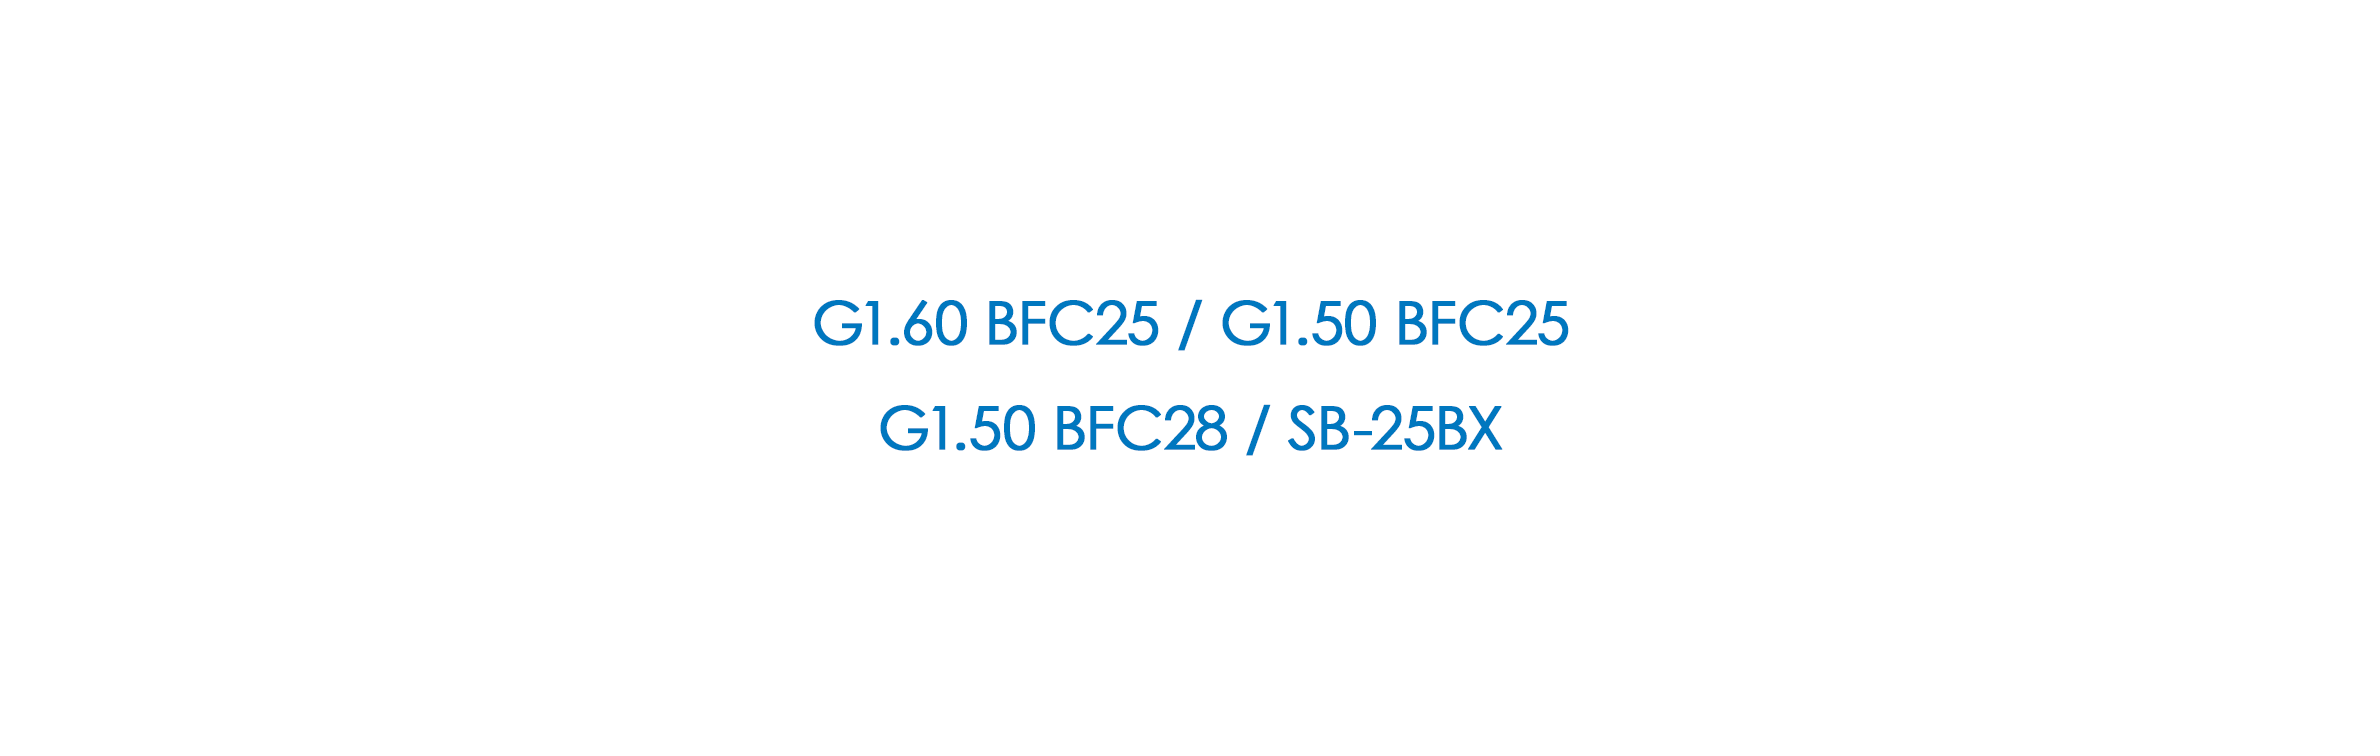 G1.60 BFC25 / G1.50 BFC25 / G1.50 BFC28 / SB-25BX